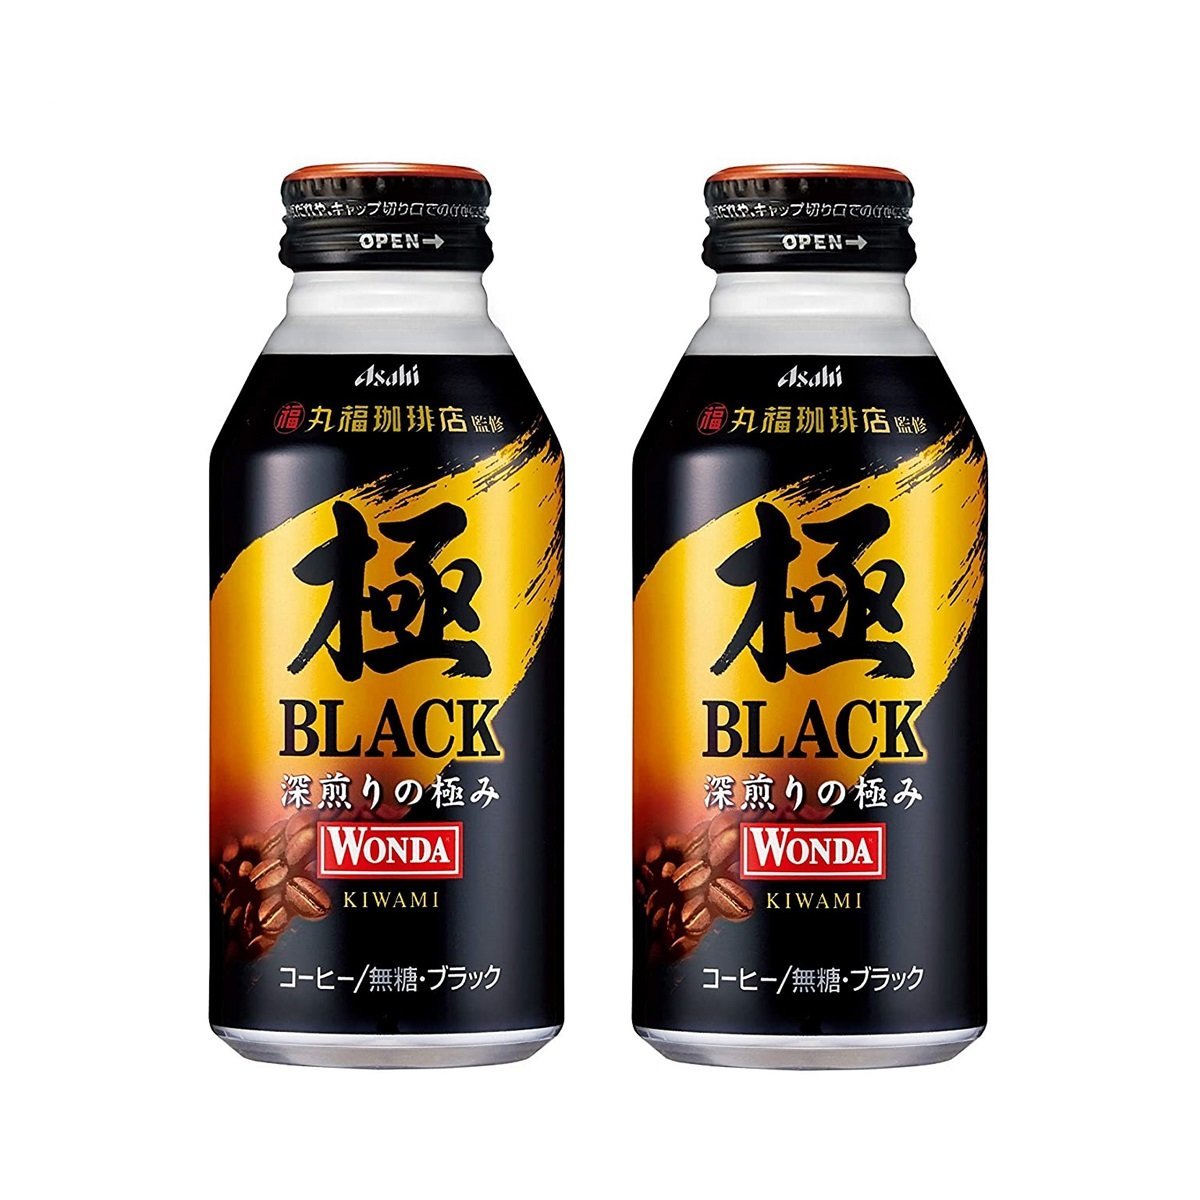 Asahi | Wonda Black coffee 400g × 2 cans (Parallel import) New